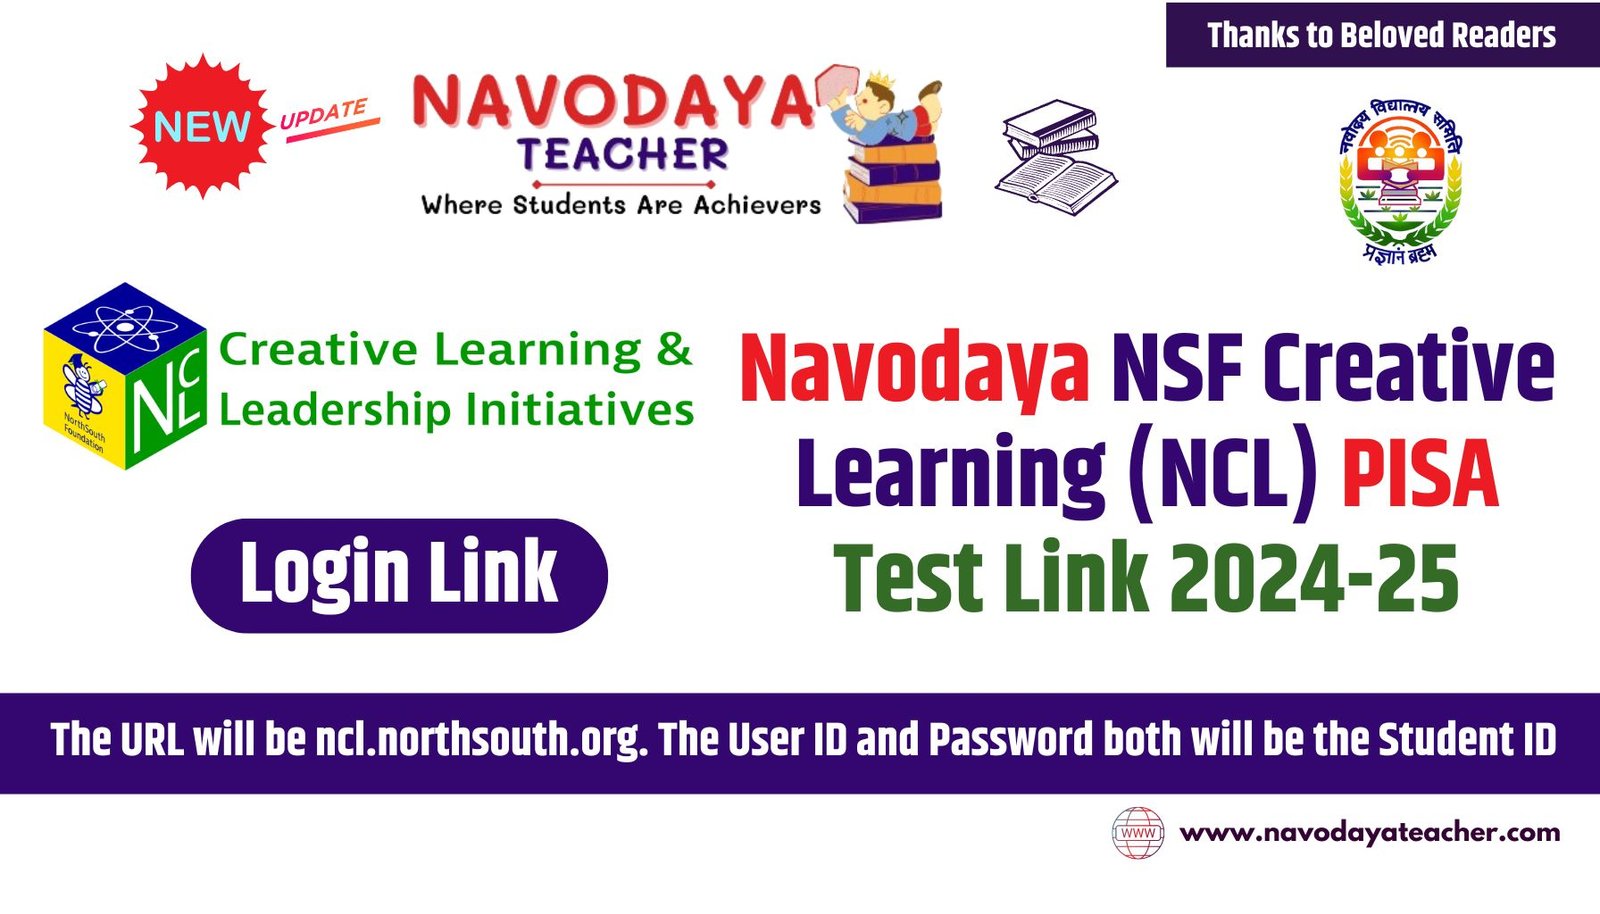 Navodaya NSF Creative Learning (NCL) Test Link 2024-25